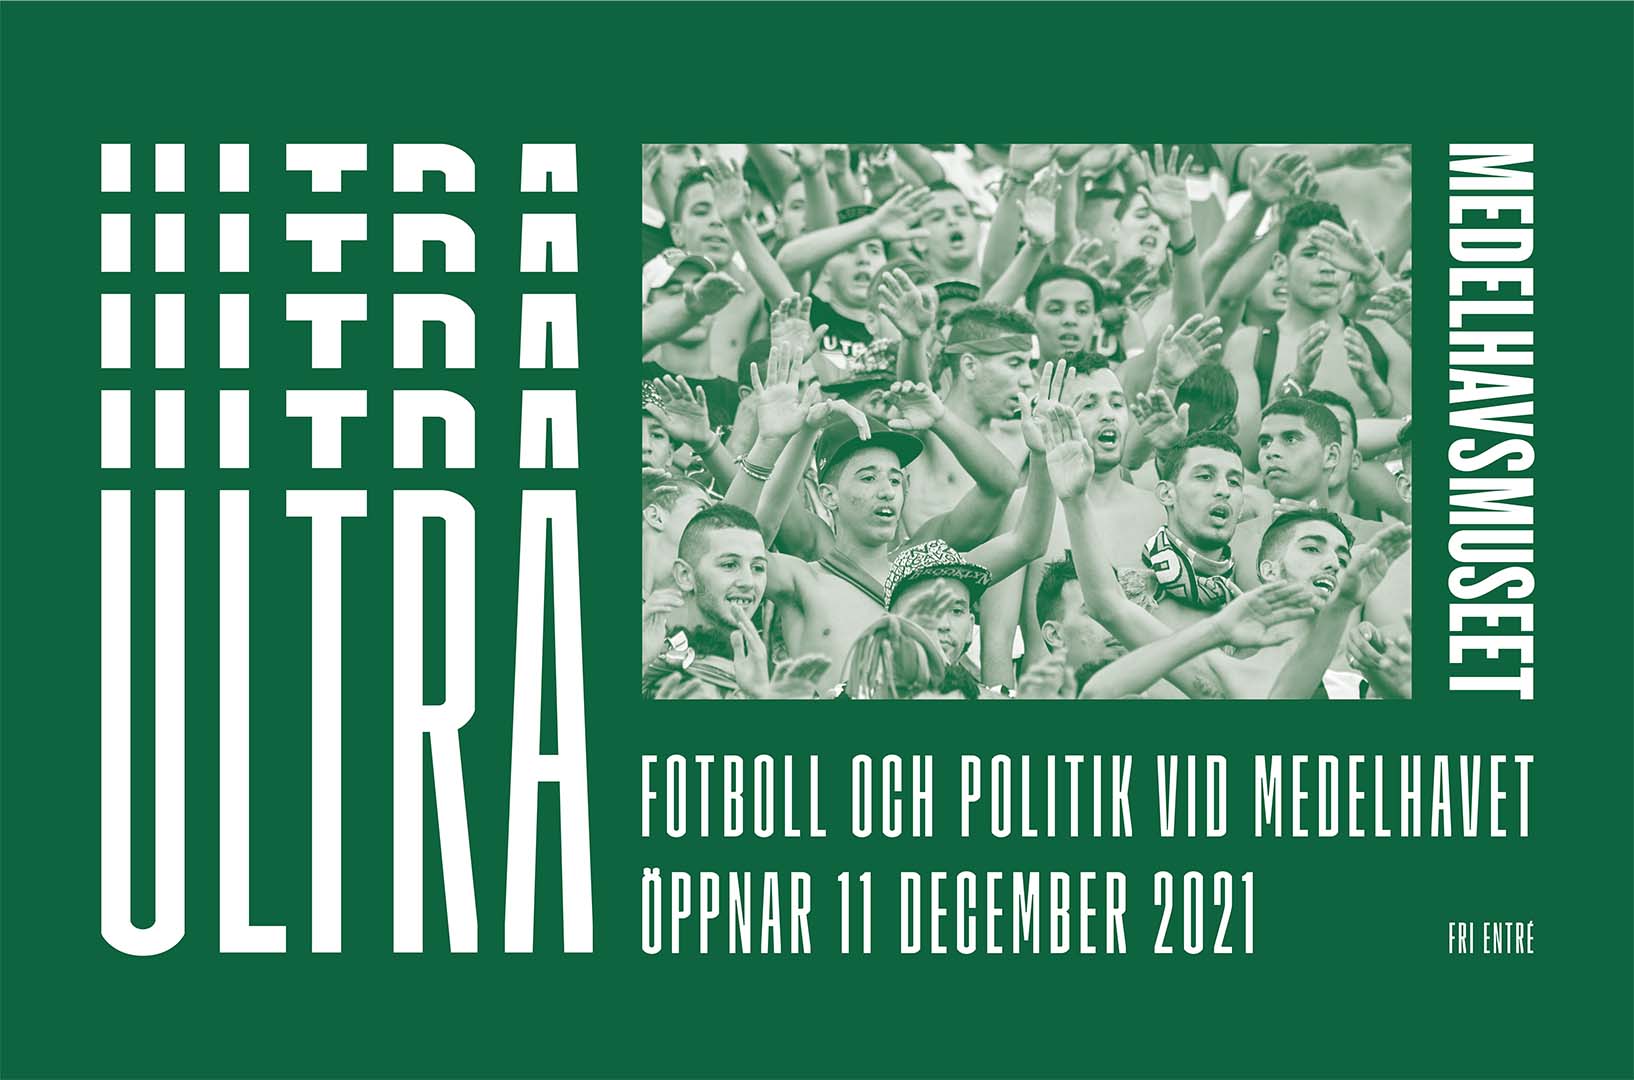 Ultra. Football and politics